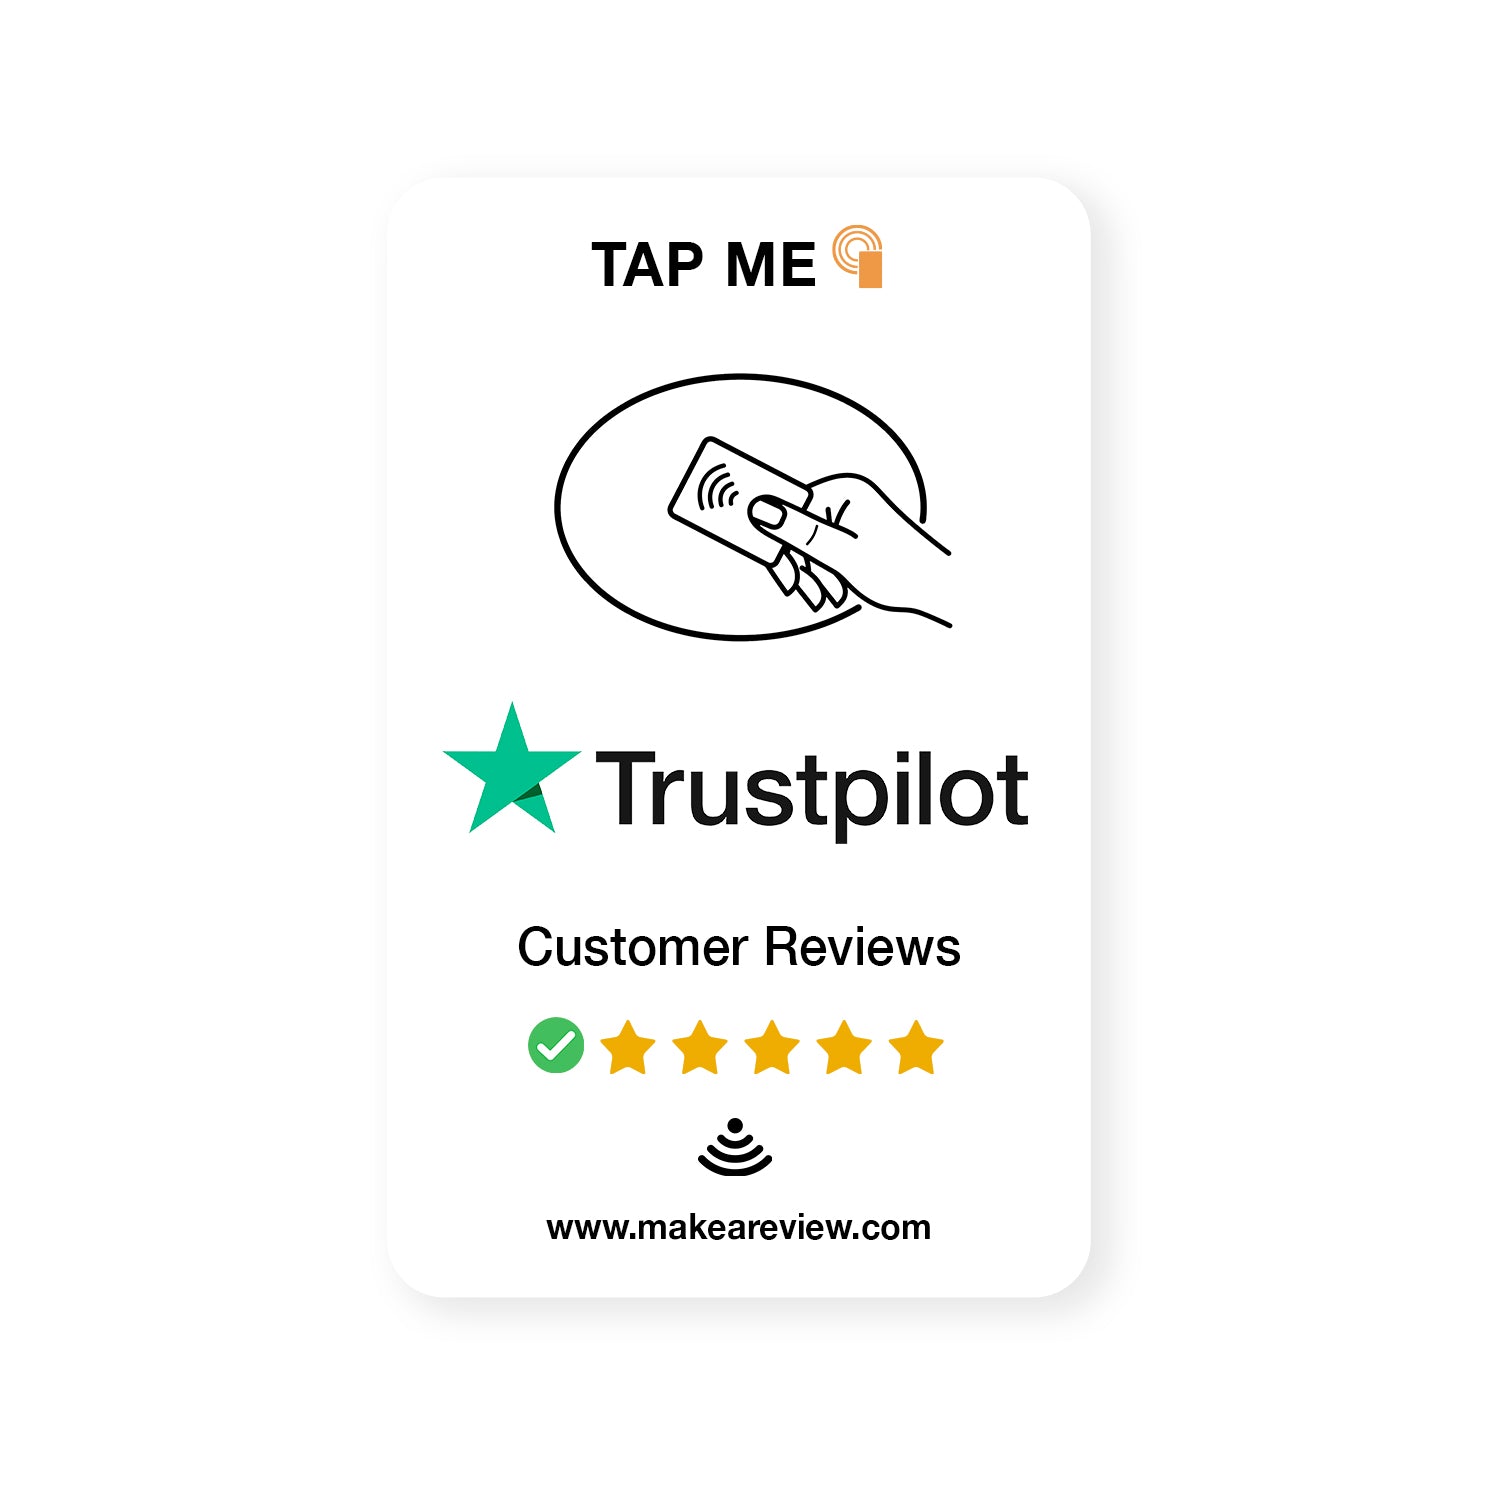 Trustpilot Review Card